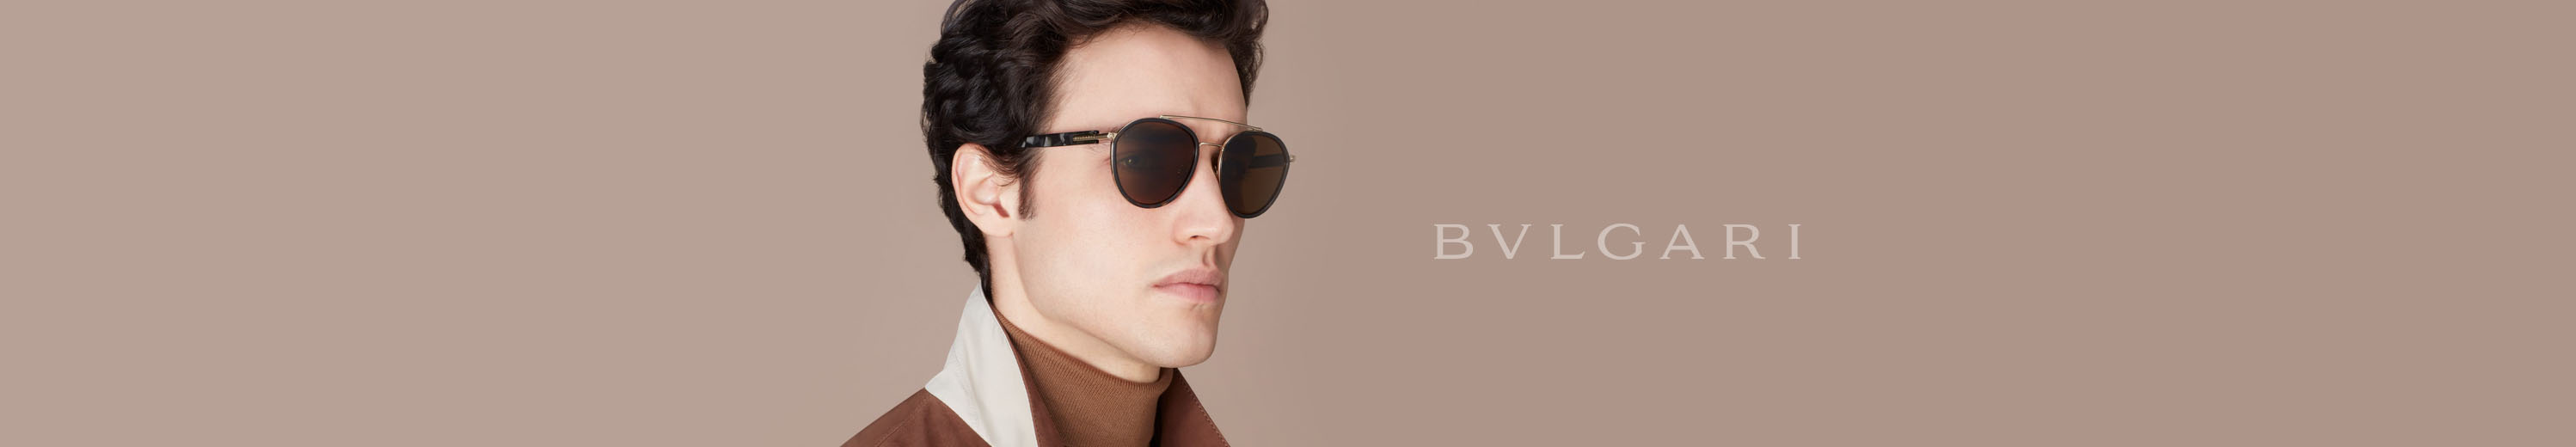 Bvlgari Sunglasses for Men